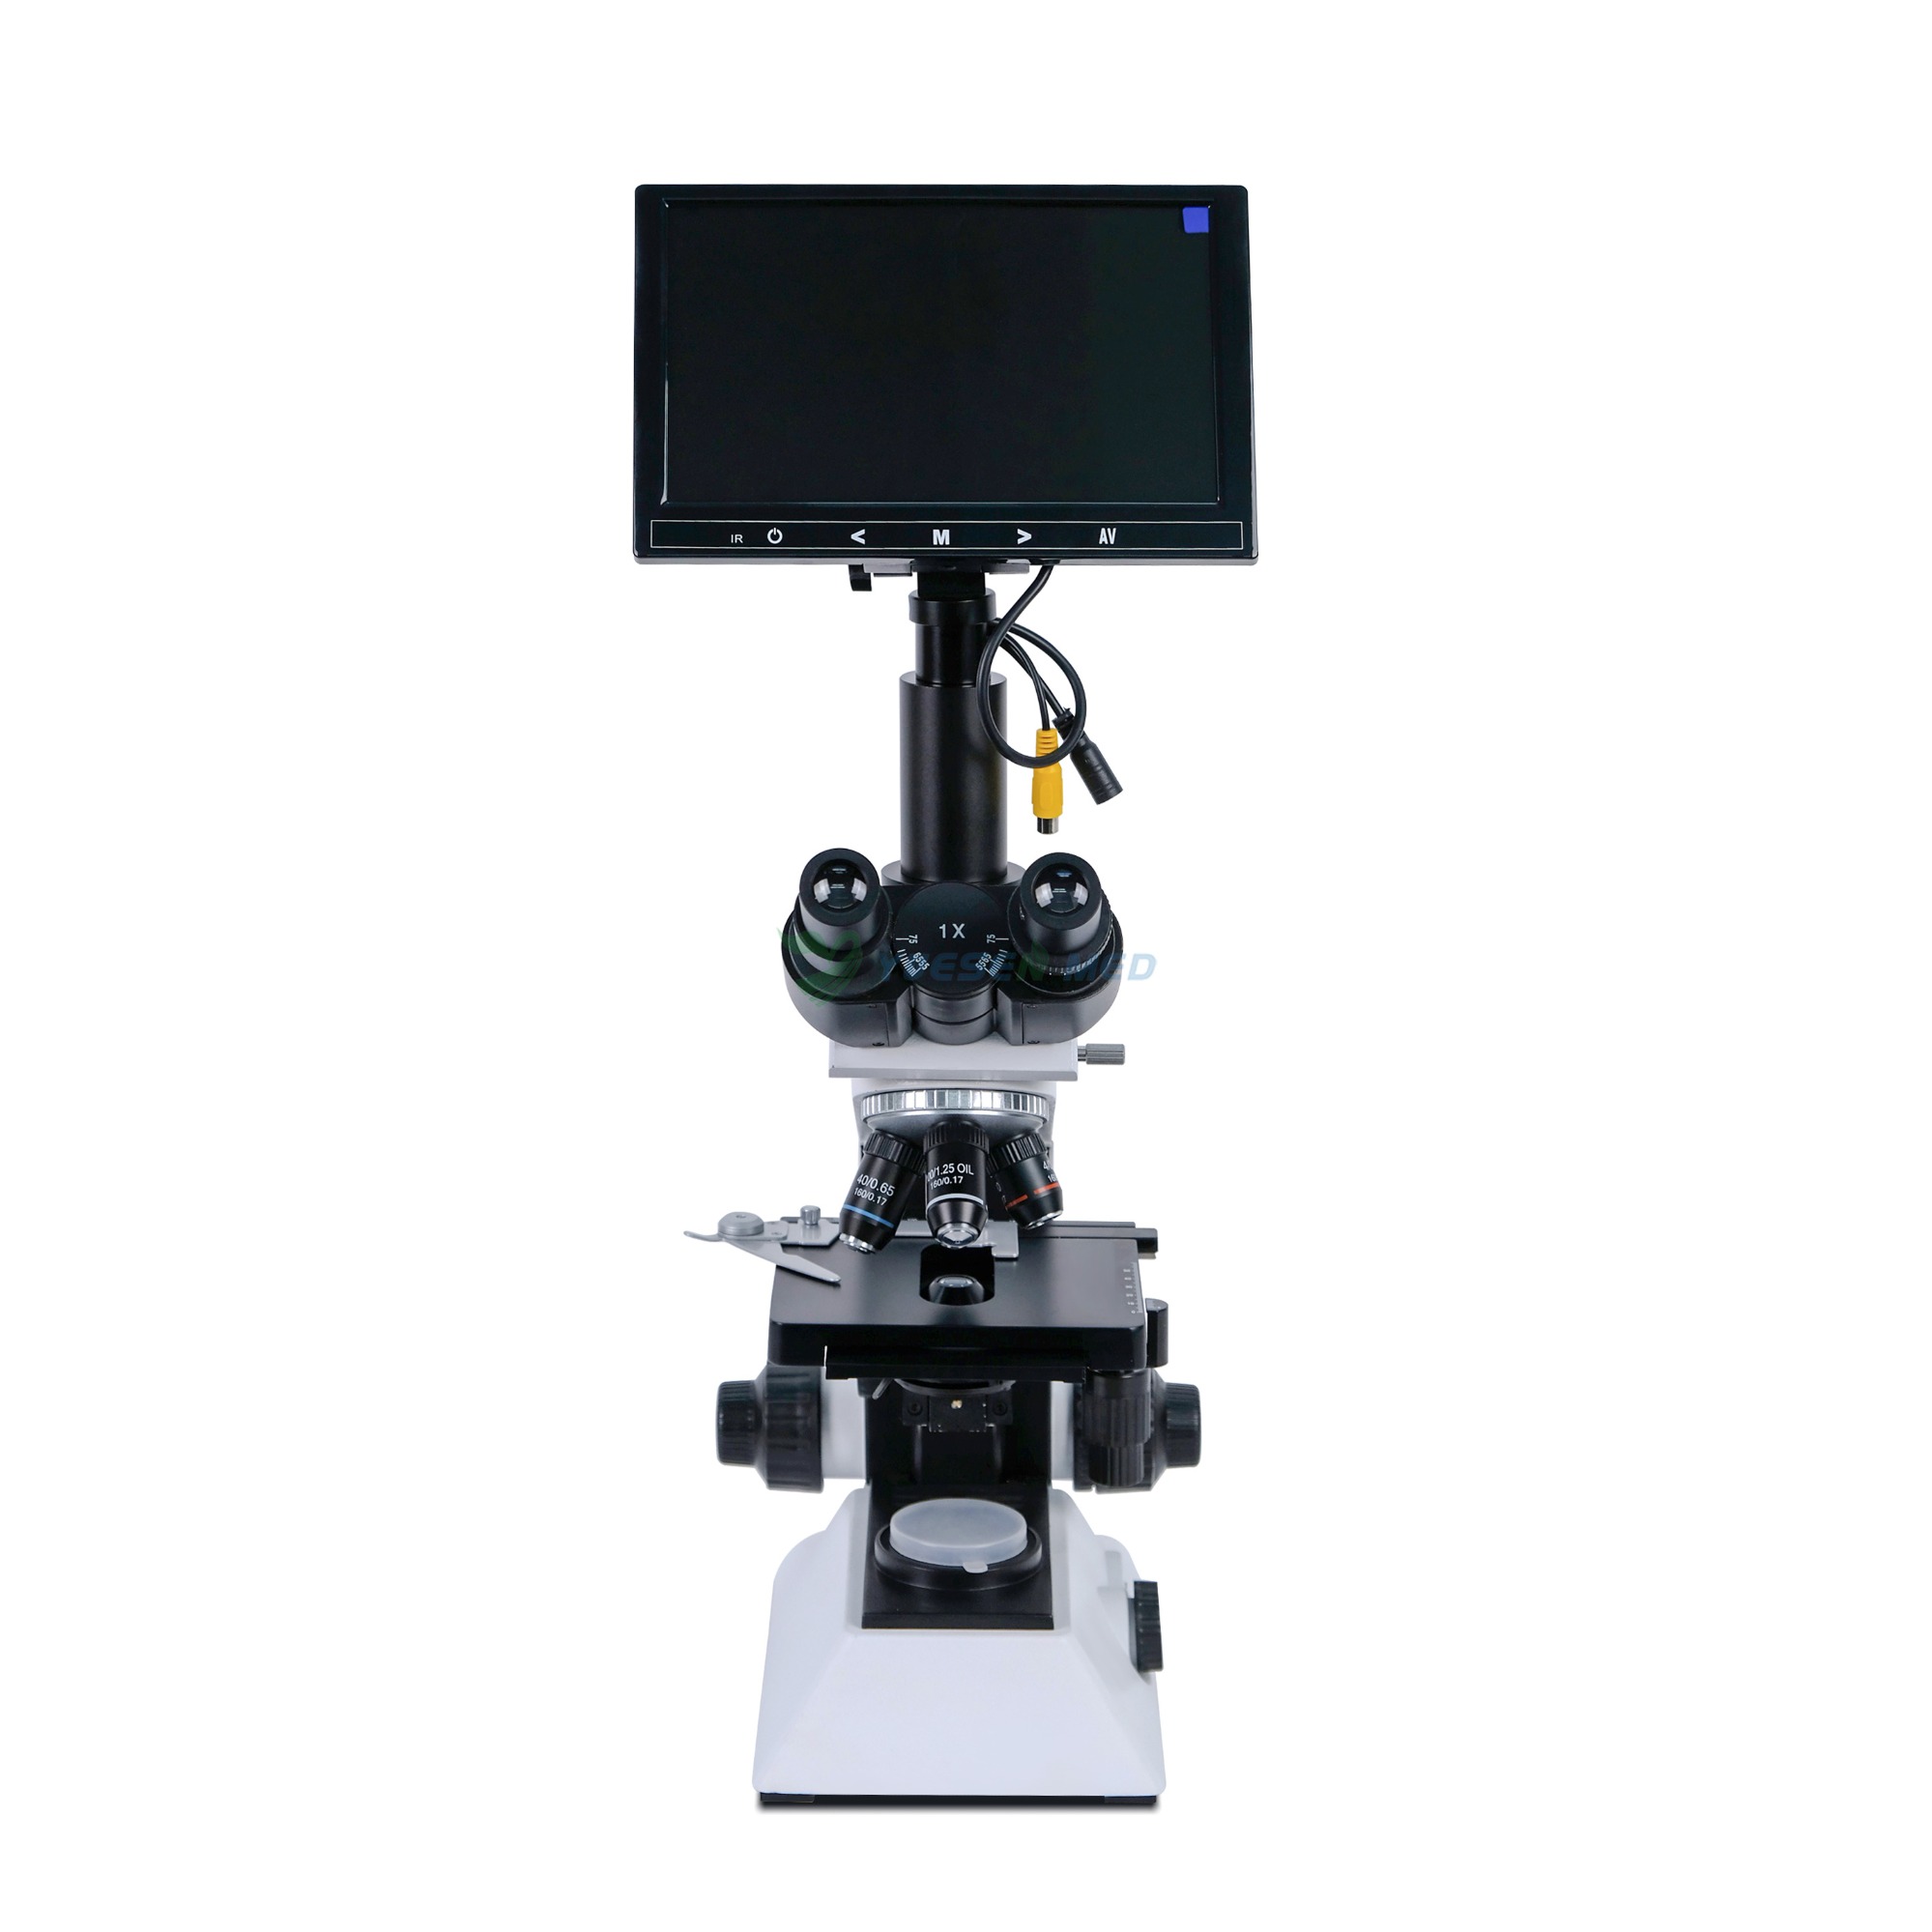 Lab clinic electronic microscope YSXWJ-CX80